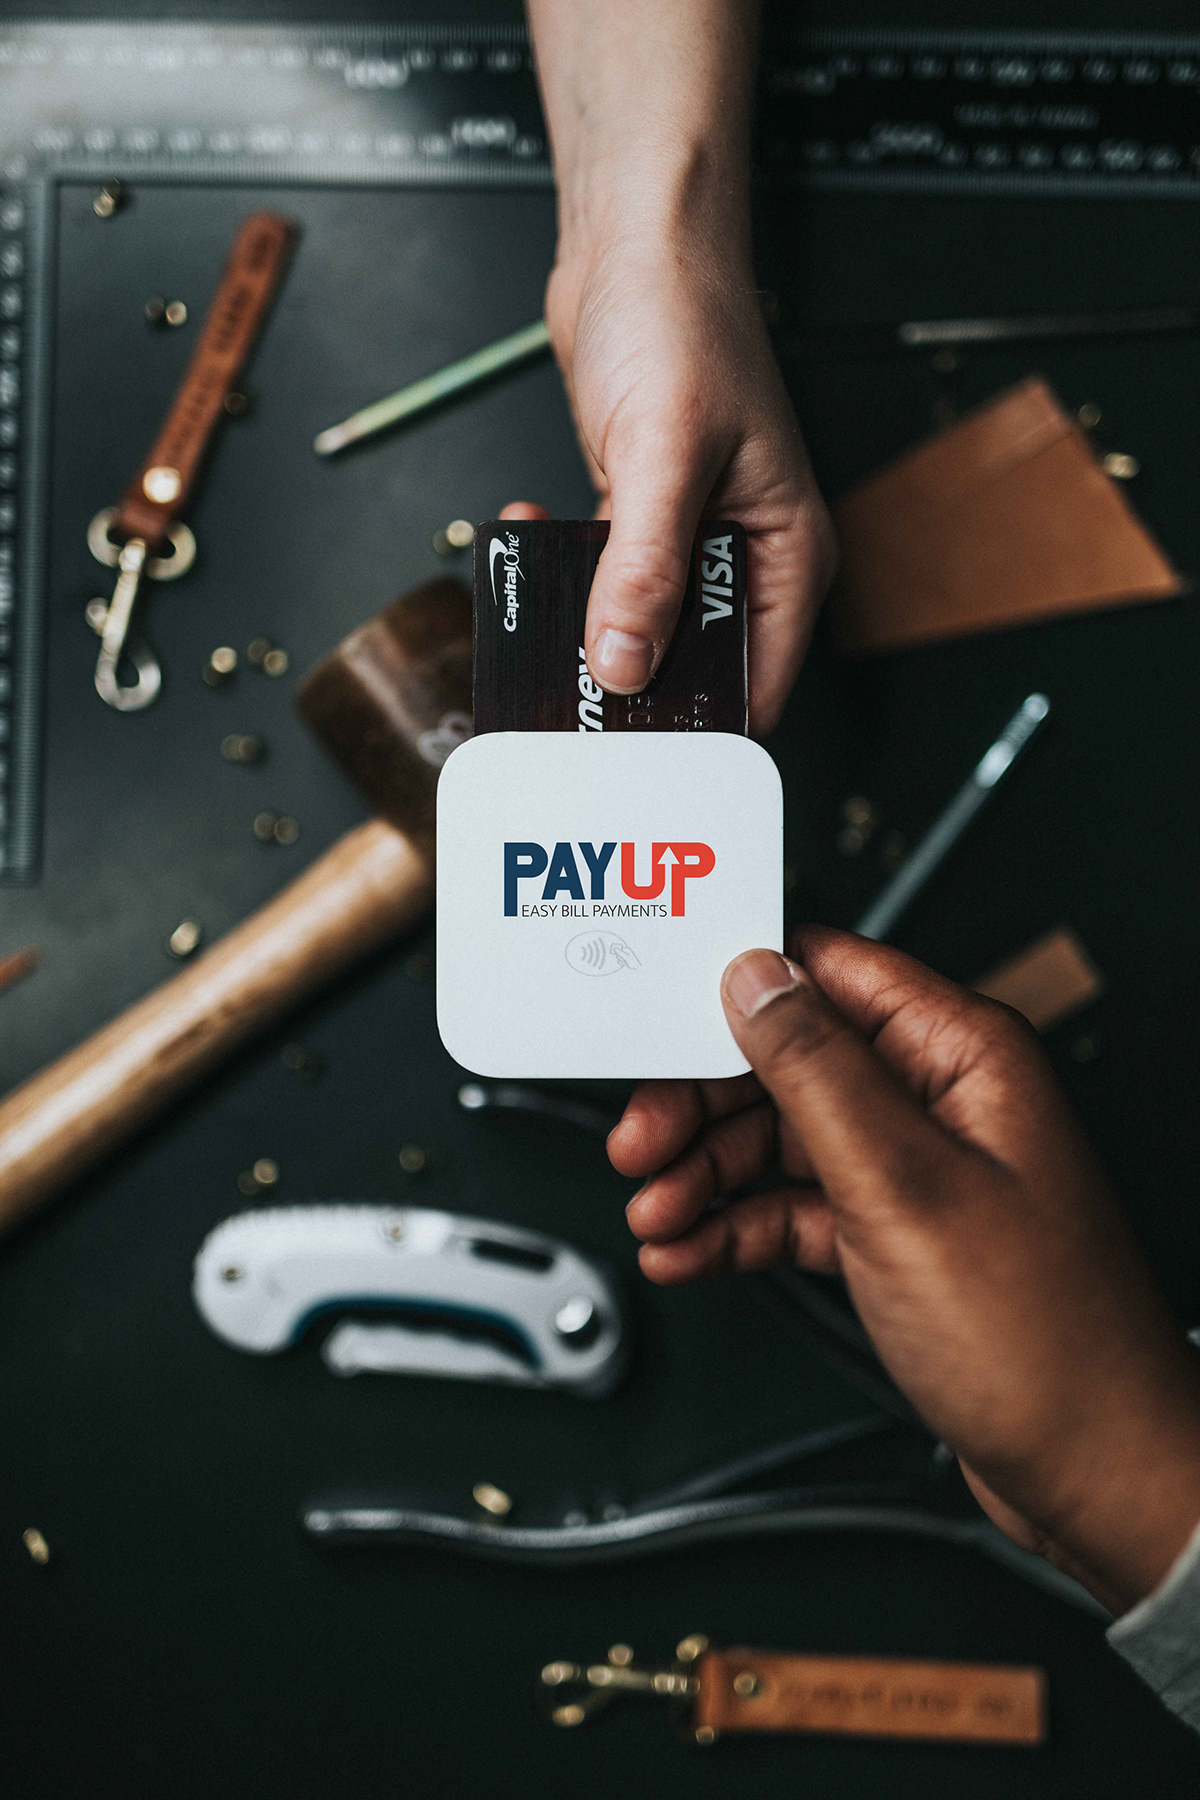 Payup bill payment logo mockup design by Gaurav Singh free lance graphic designer.